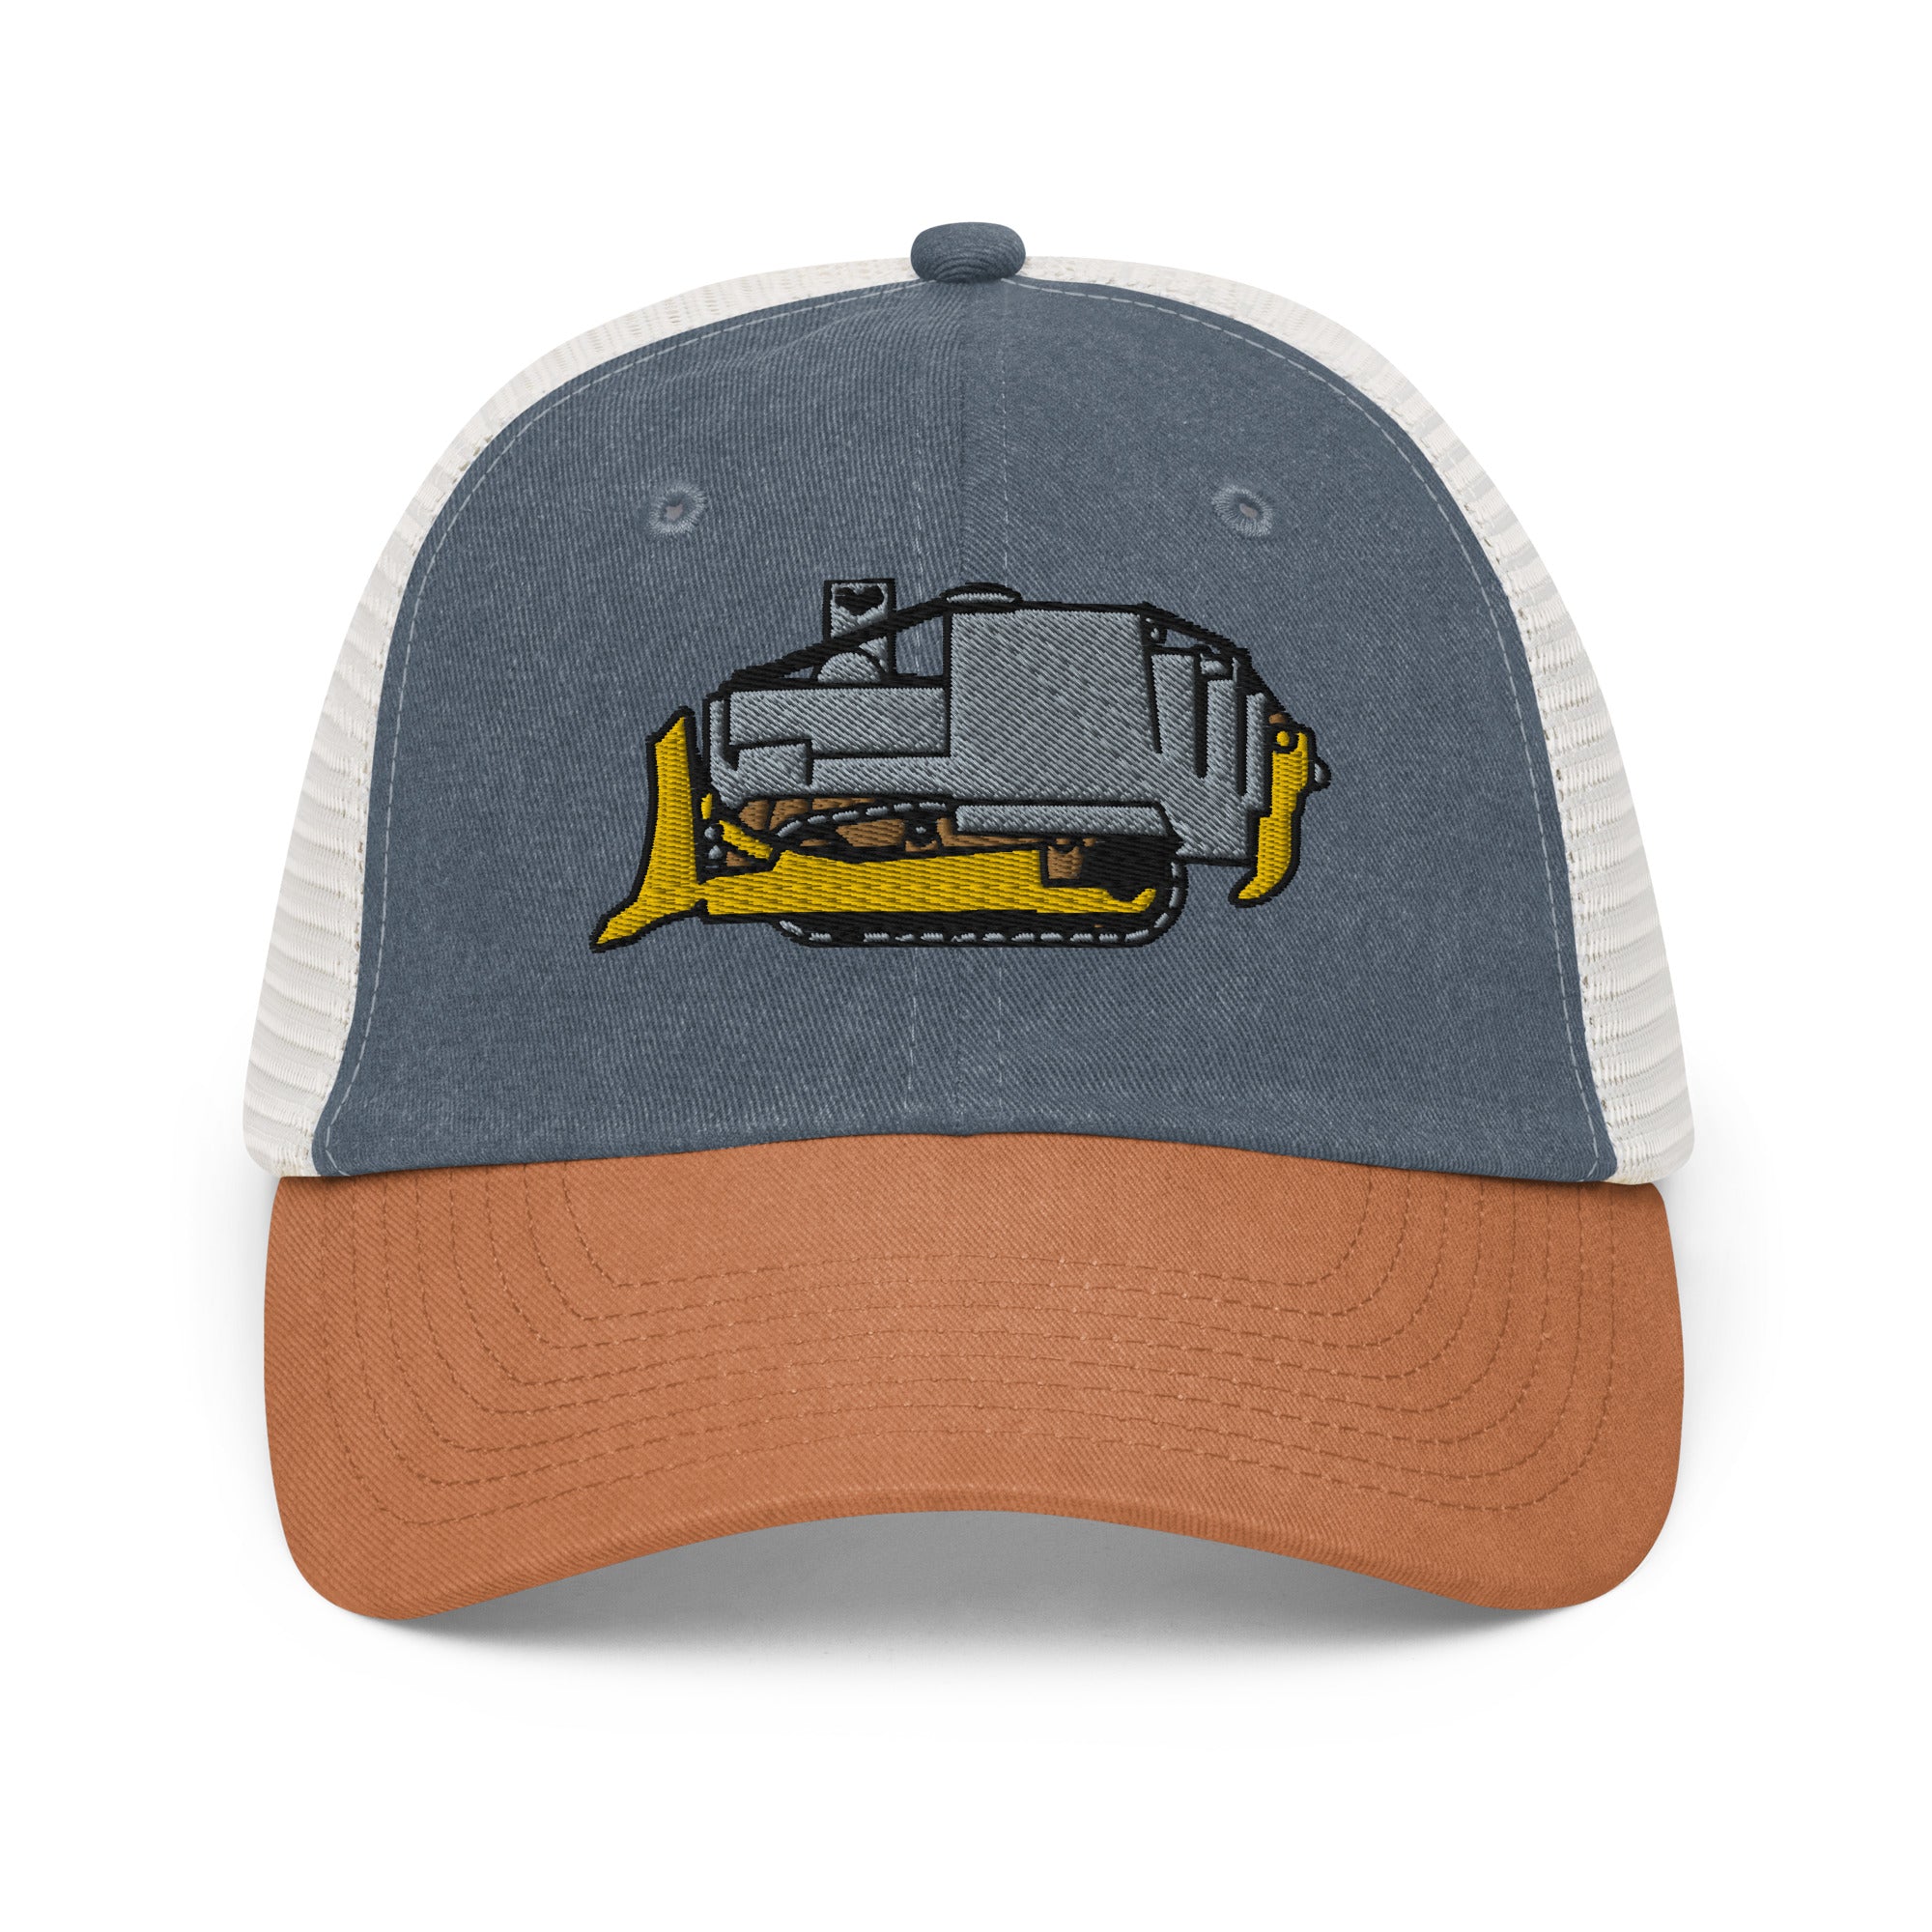 Killdozer Pigment-dyed Trucker Hat